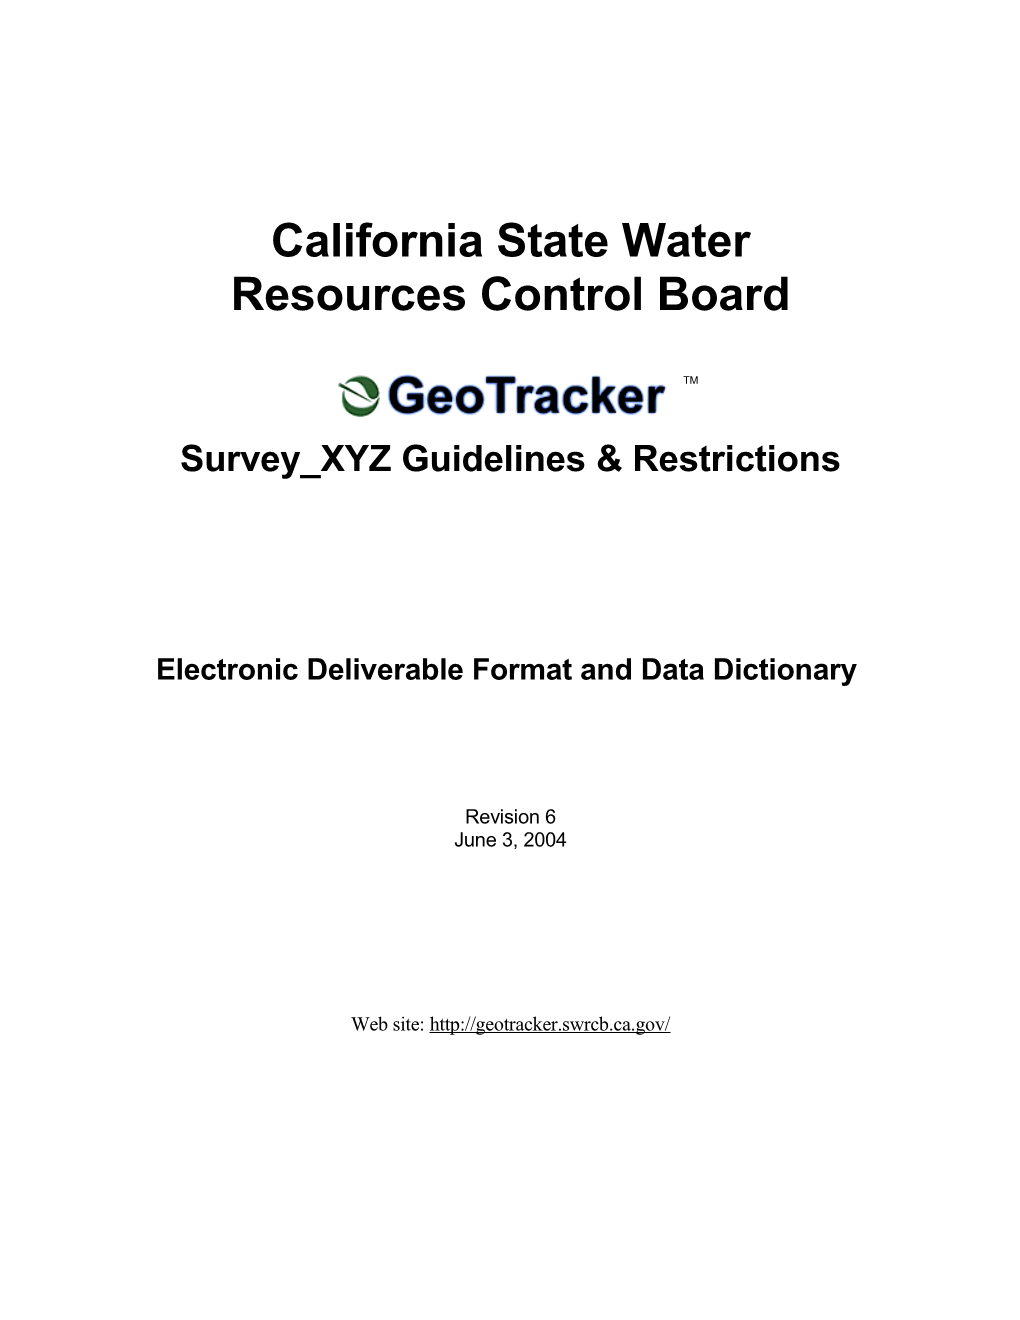 Geotracker Survey XYZ